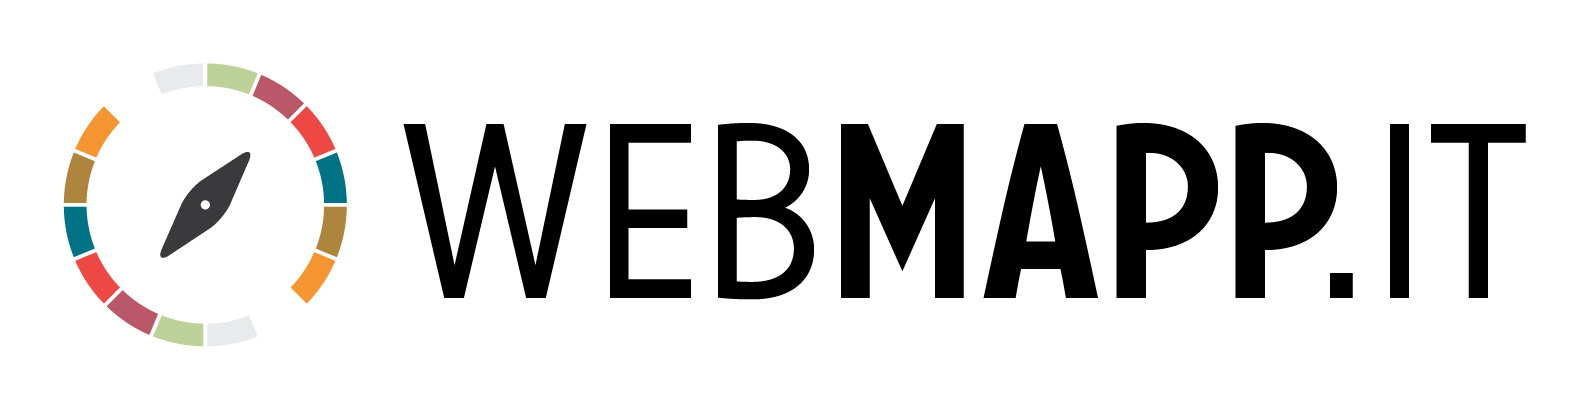 Webmapp logo